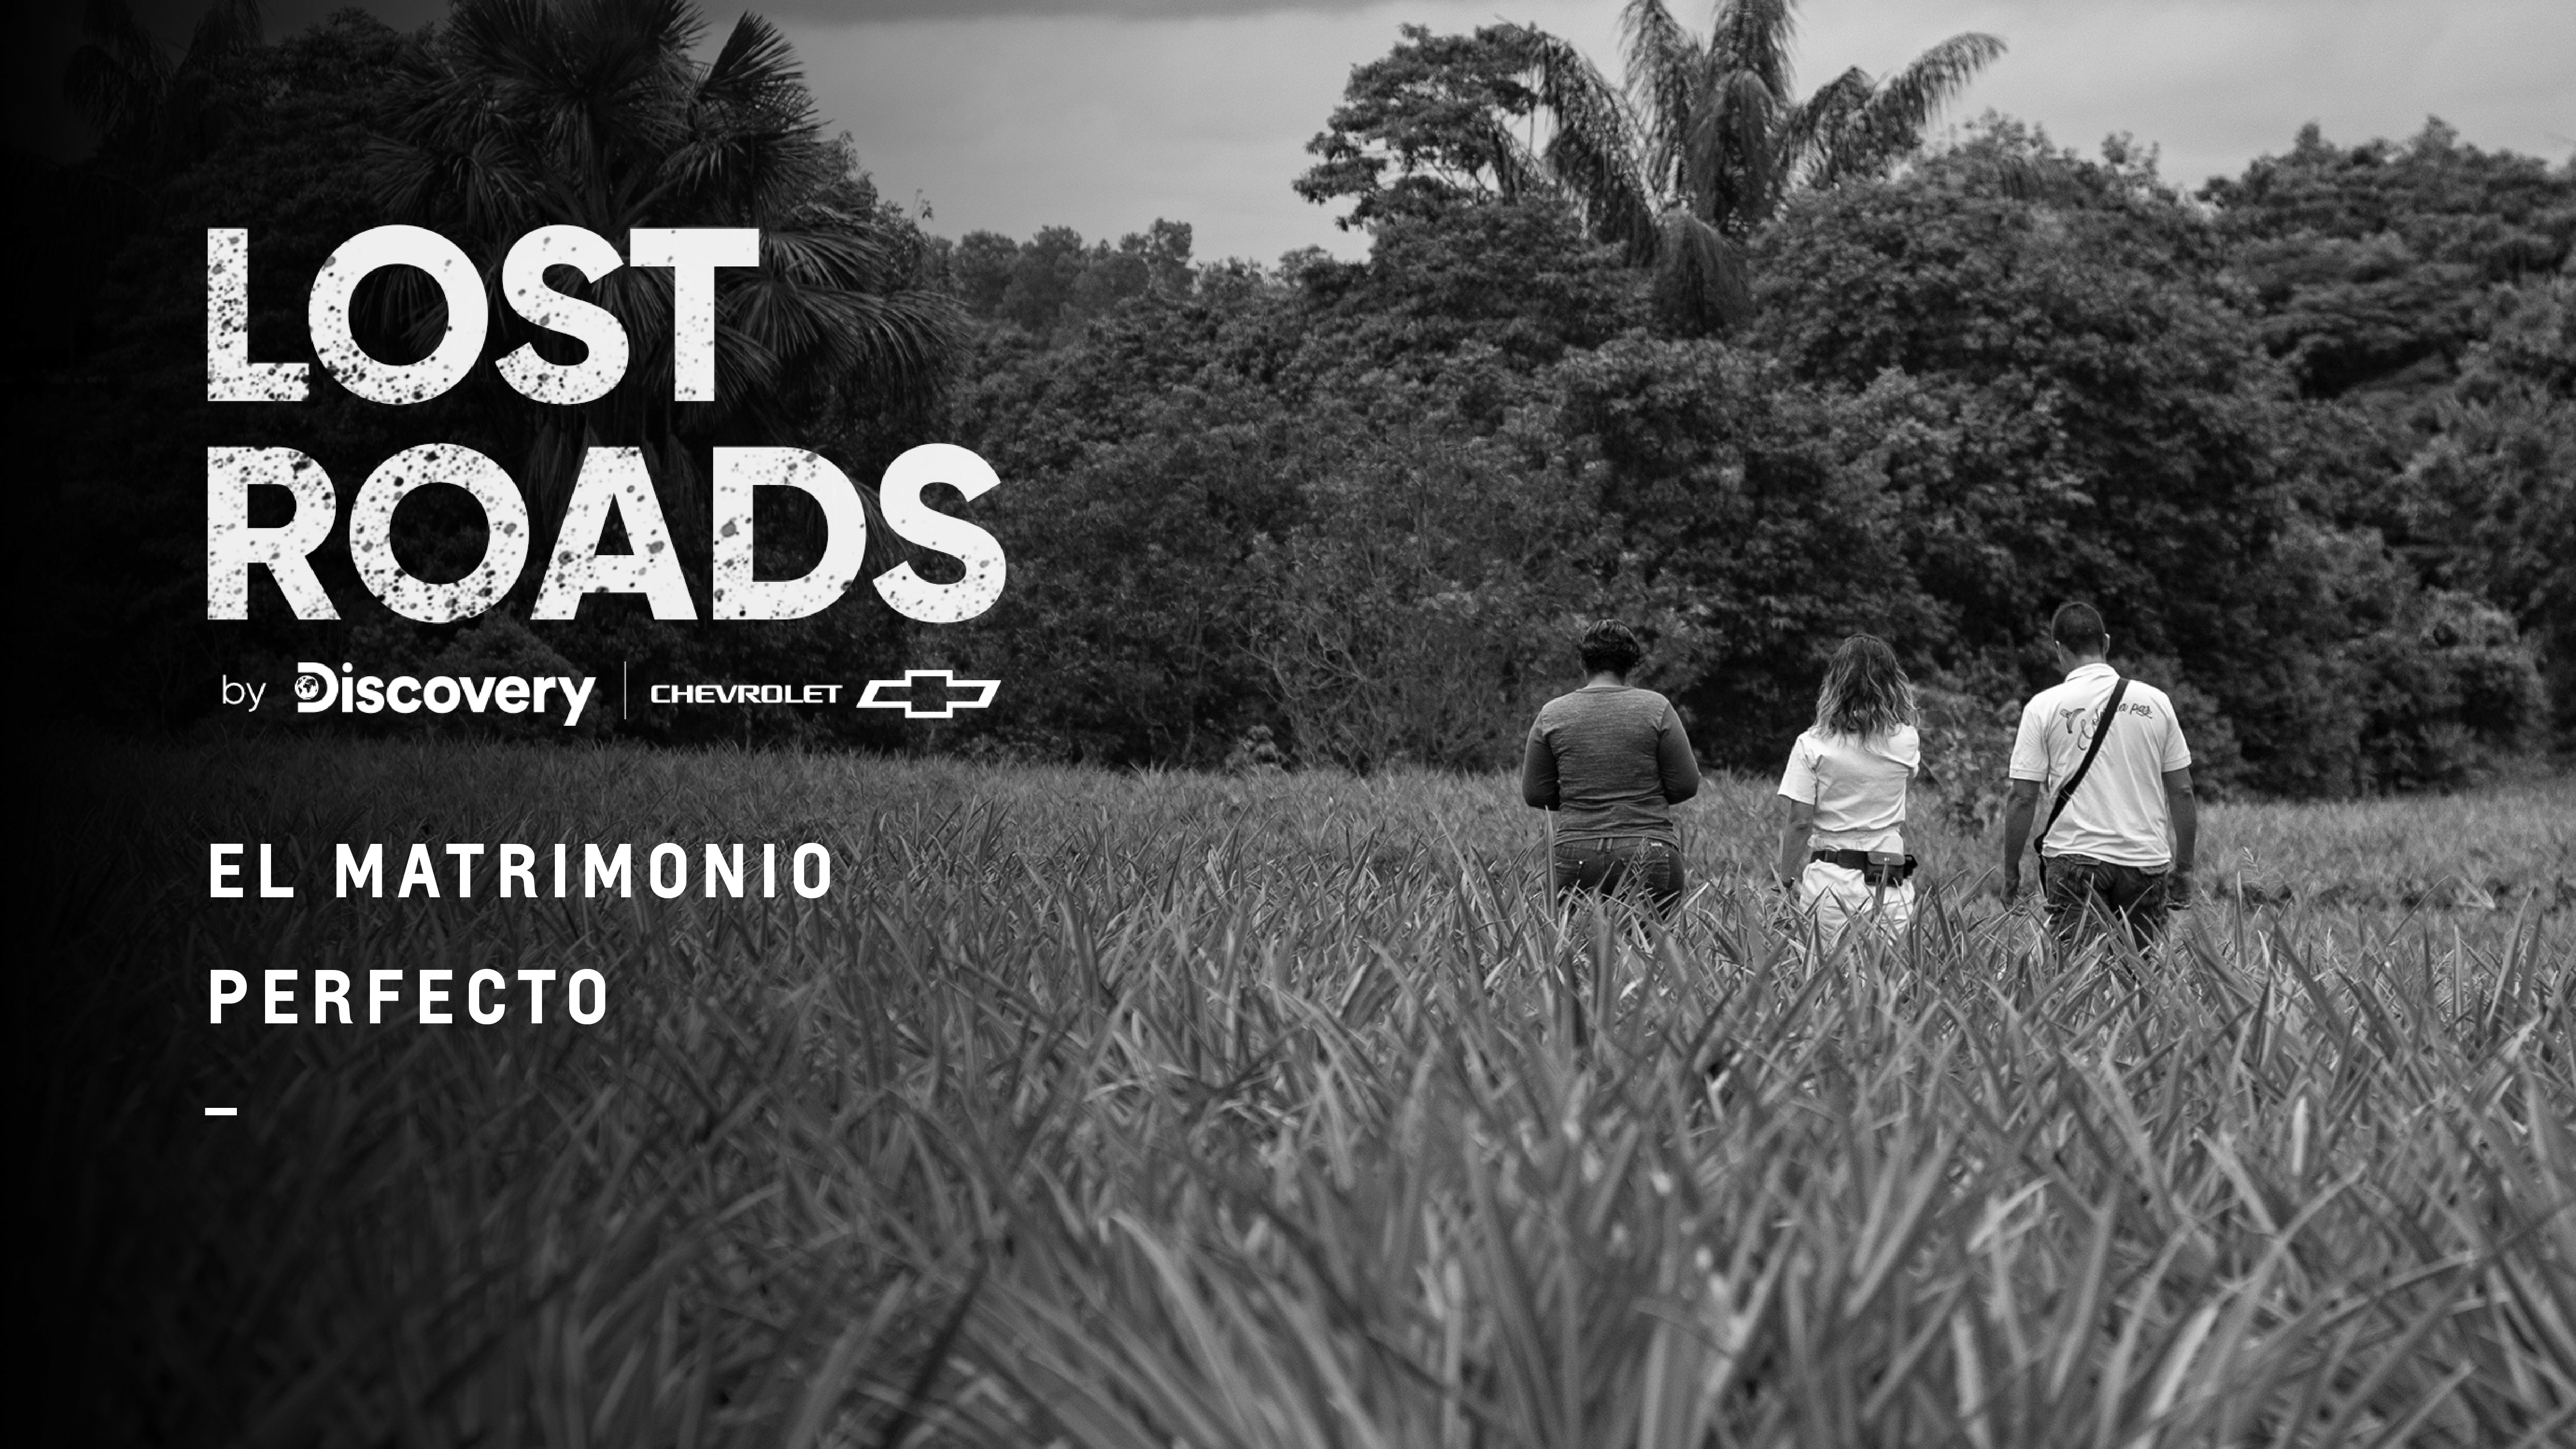 Lost Roads: Chevrolet y Discovery Channel, el matrimonio perfecto